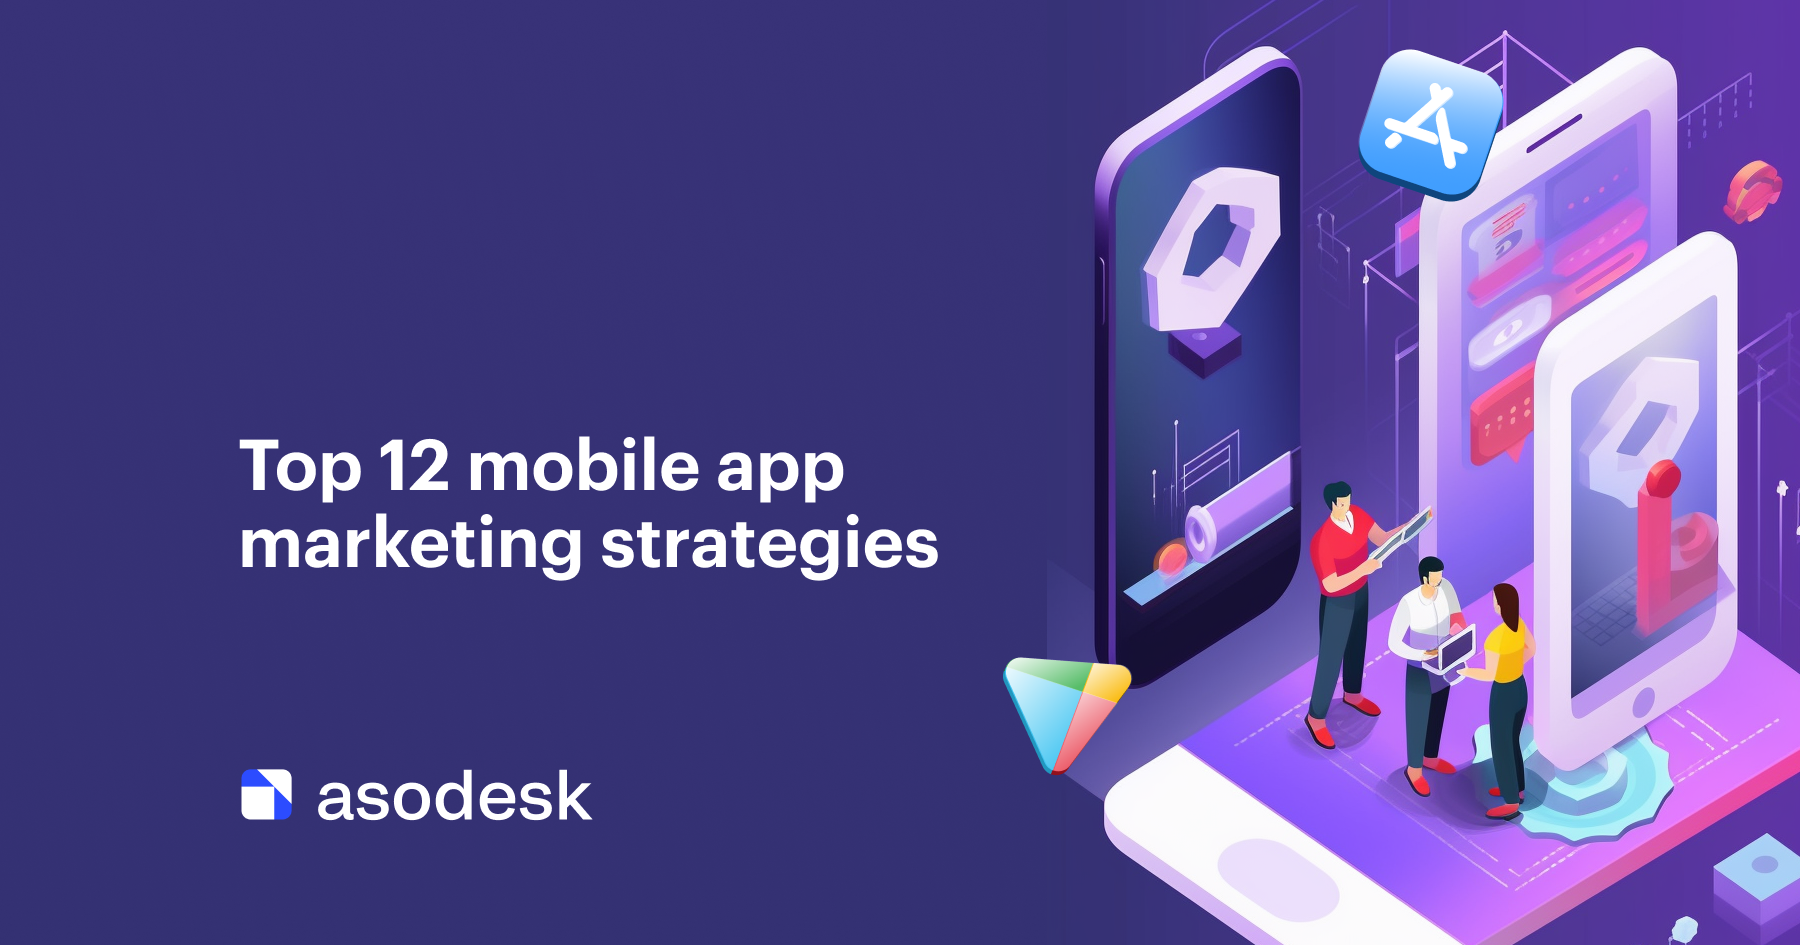 Top 12 mobile app marketing strategies